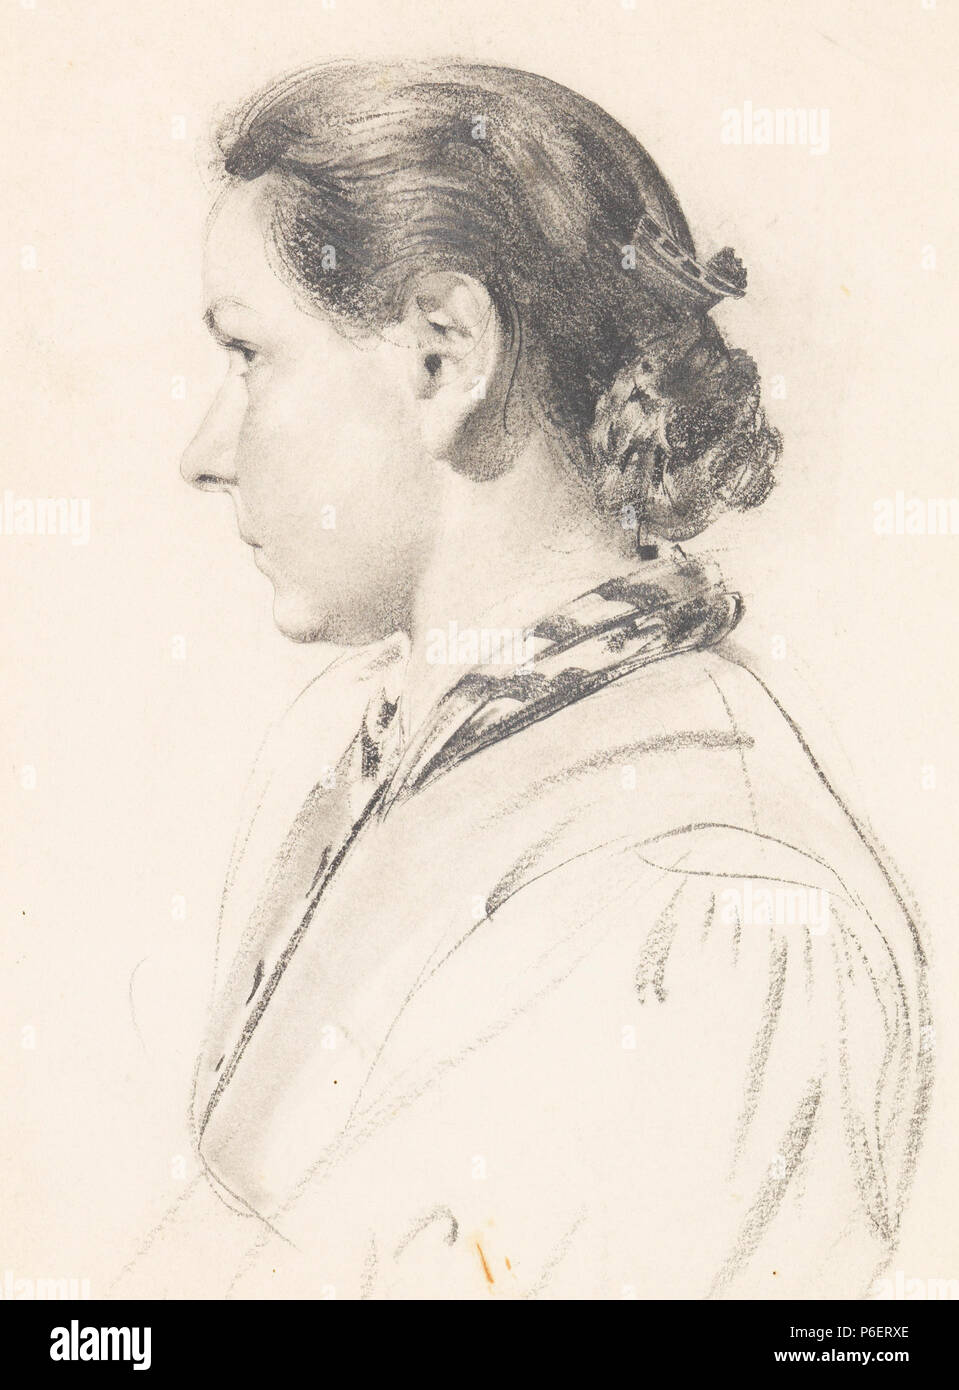 Junge Frau im Profil. Kohle- und Bleistiftzeichnung. 20,9 x 15,5 cm Blattgröße . circa 1900 59 Konrad Boese Junge Frau im Profil ca1900 Stock Photo